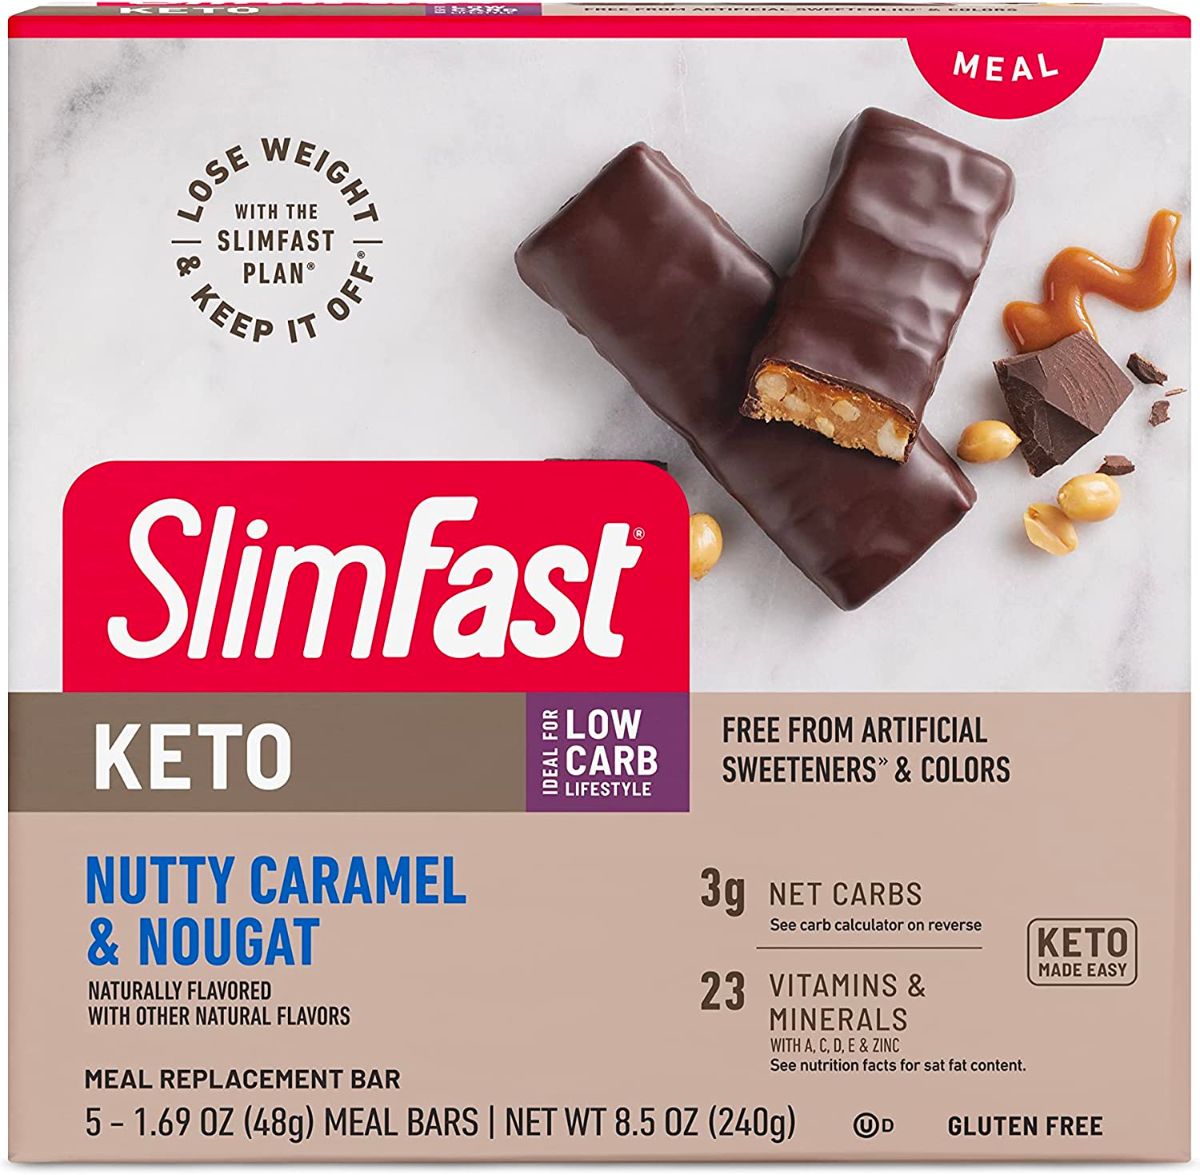 Slim fast keto nutty caramel and nugat meal bars